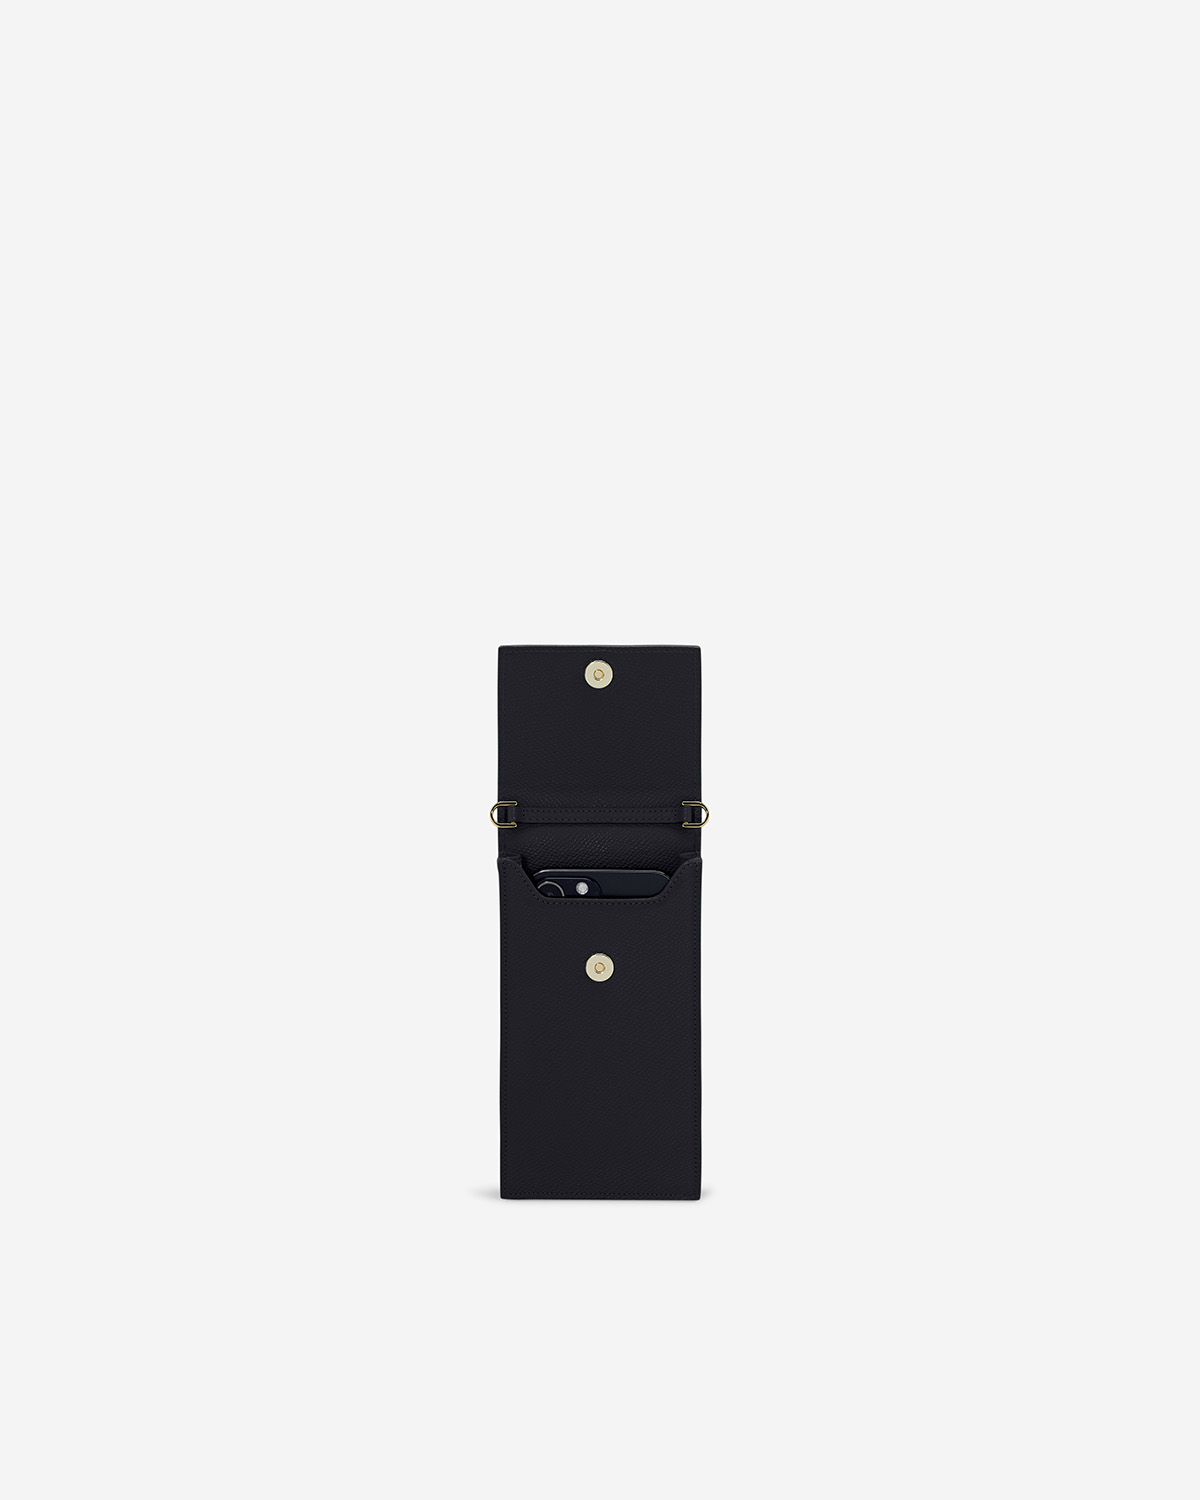 VERA Emily Phone Pouch with Leather Gold Chain in Powerful Black กระเป๋าใส่โทรศัพท์หนังแท้ พร้อมฟังก์ชั่นกระเป๋าสตางค์ มาพร้อมสายสะพายโซ่หนังถอดได้ สีดำ